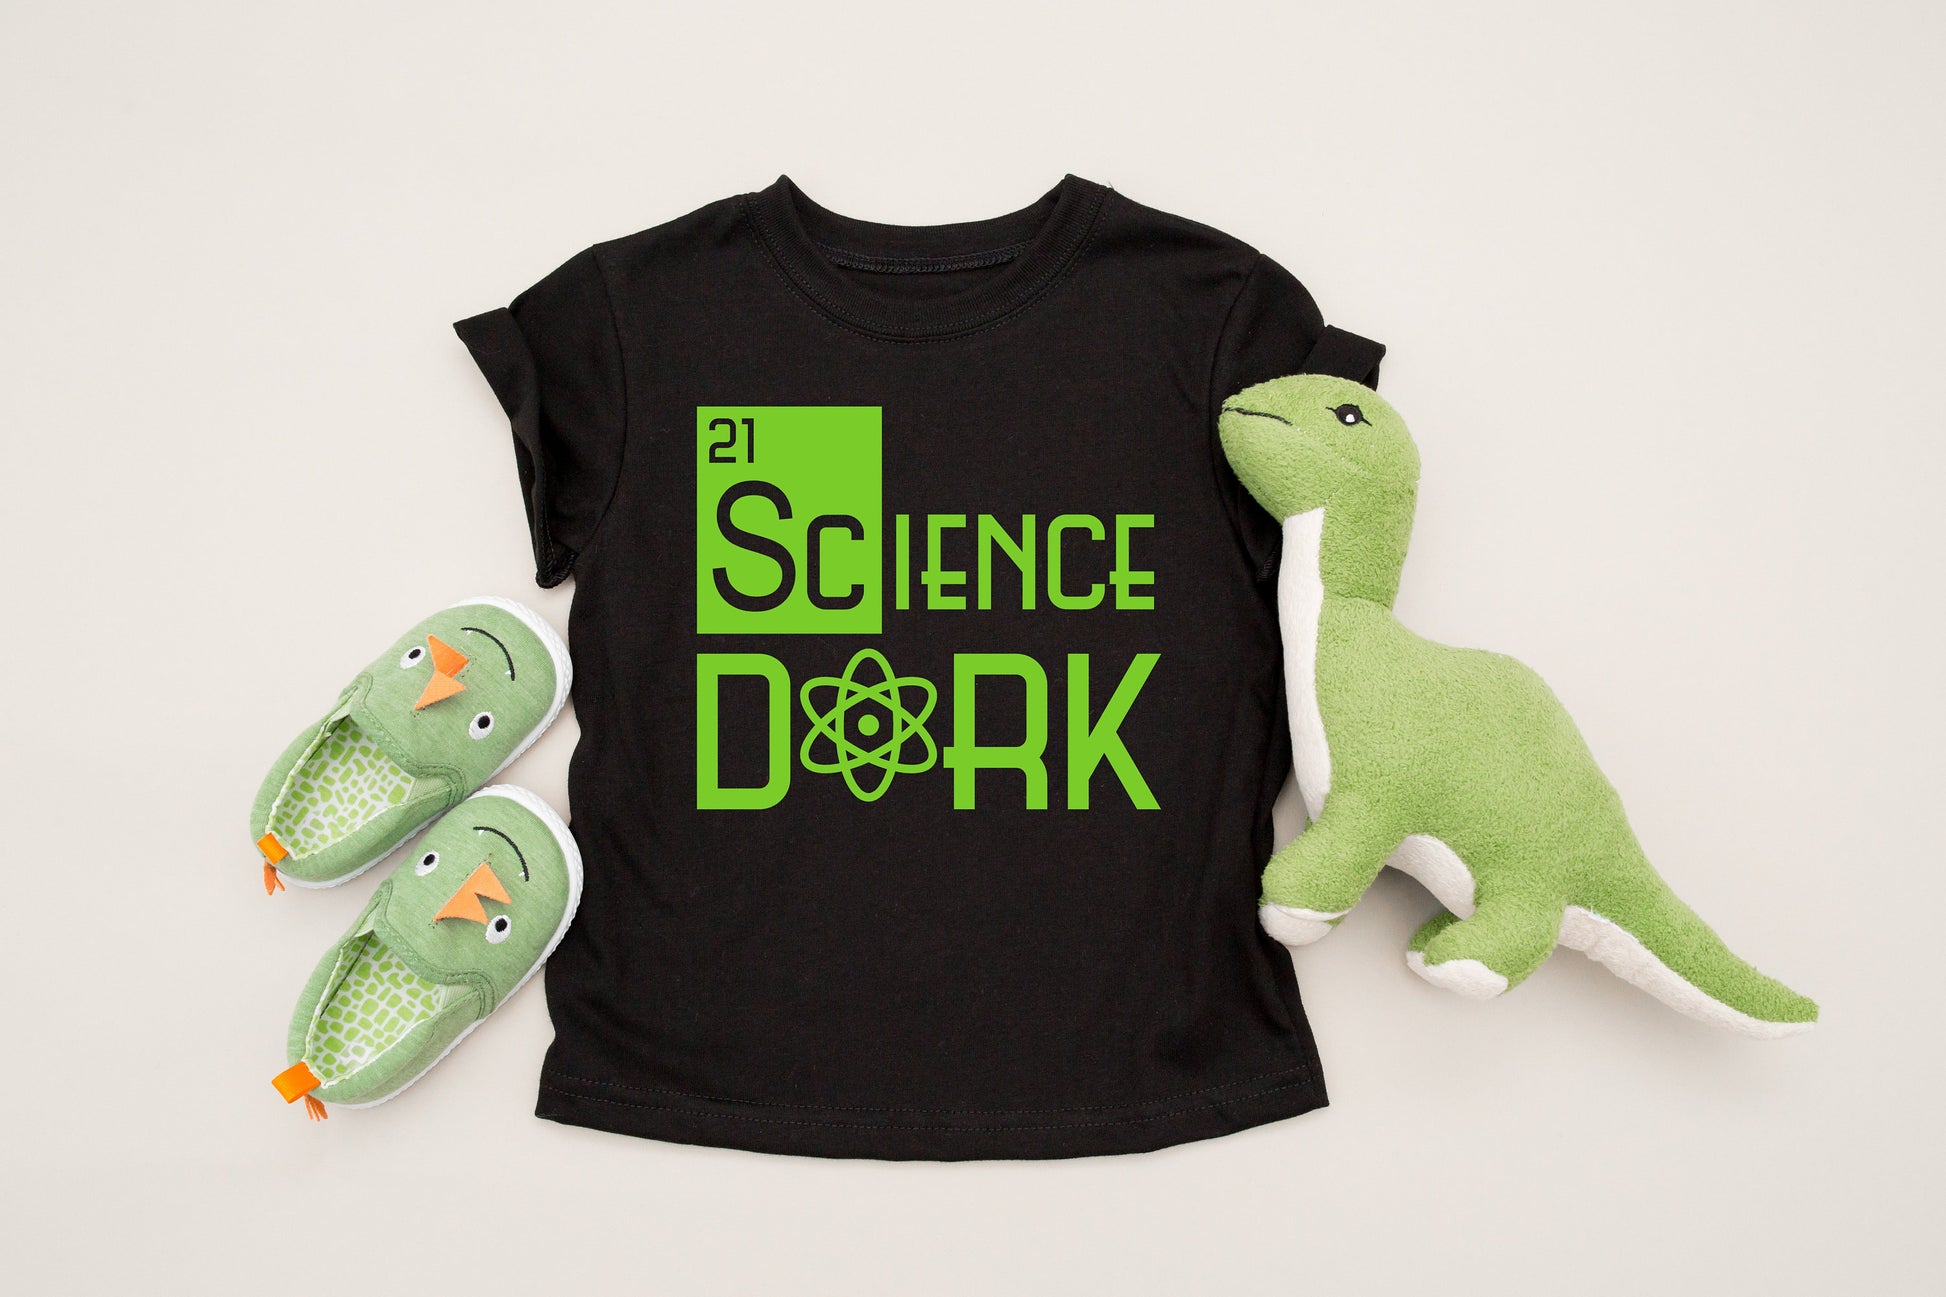 Science Dork Unisex Kids Shirt - Smart Girl Shirt -  Science Birthday Party - Nerd Shirt - Science Shirt - Geek Shirt - Science tshirt